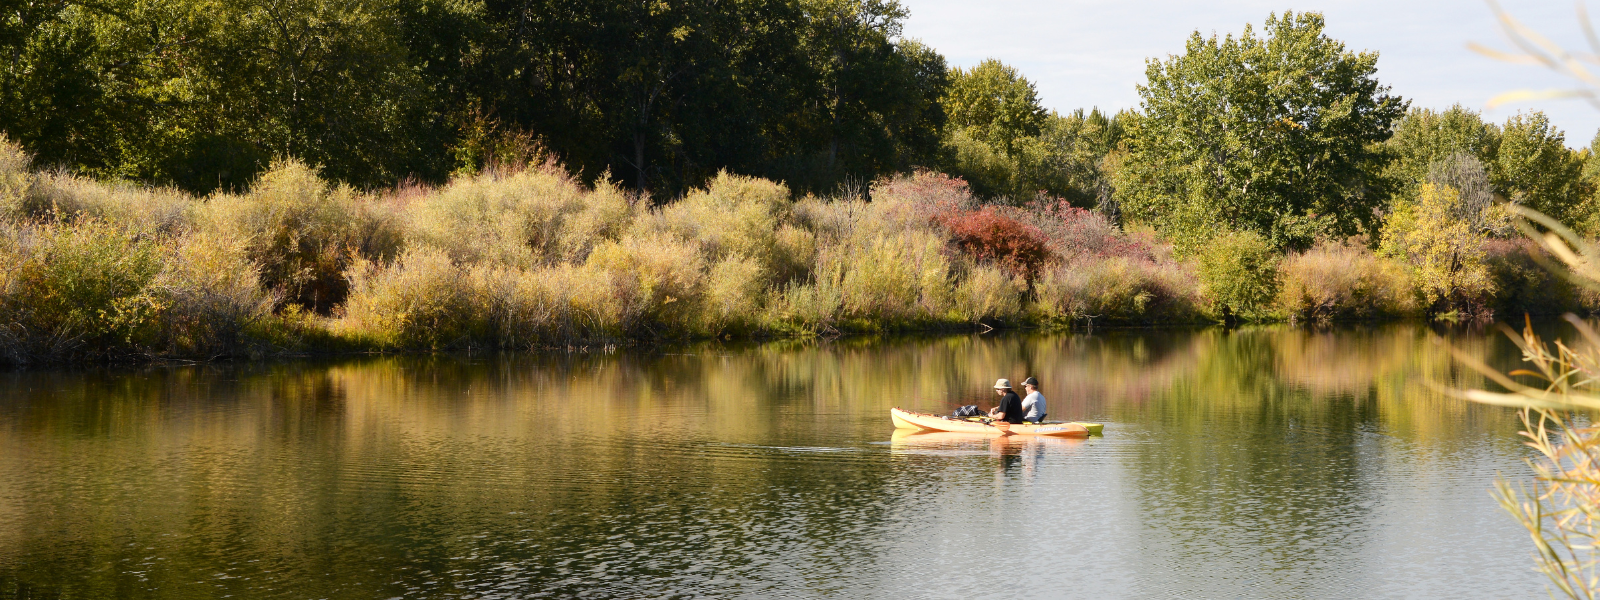 Two people in kayaks in waterbody with shoreline vegetation